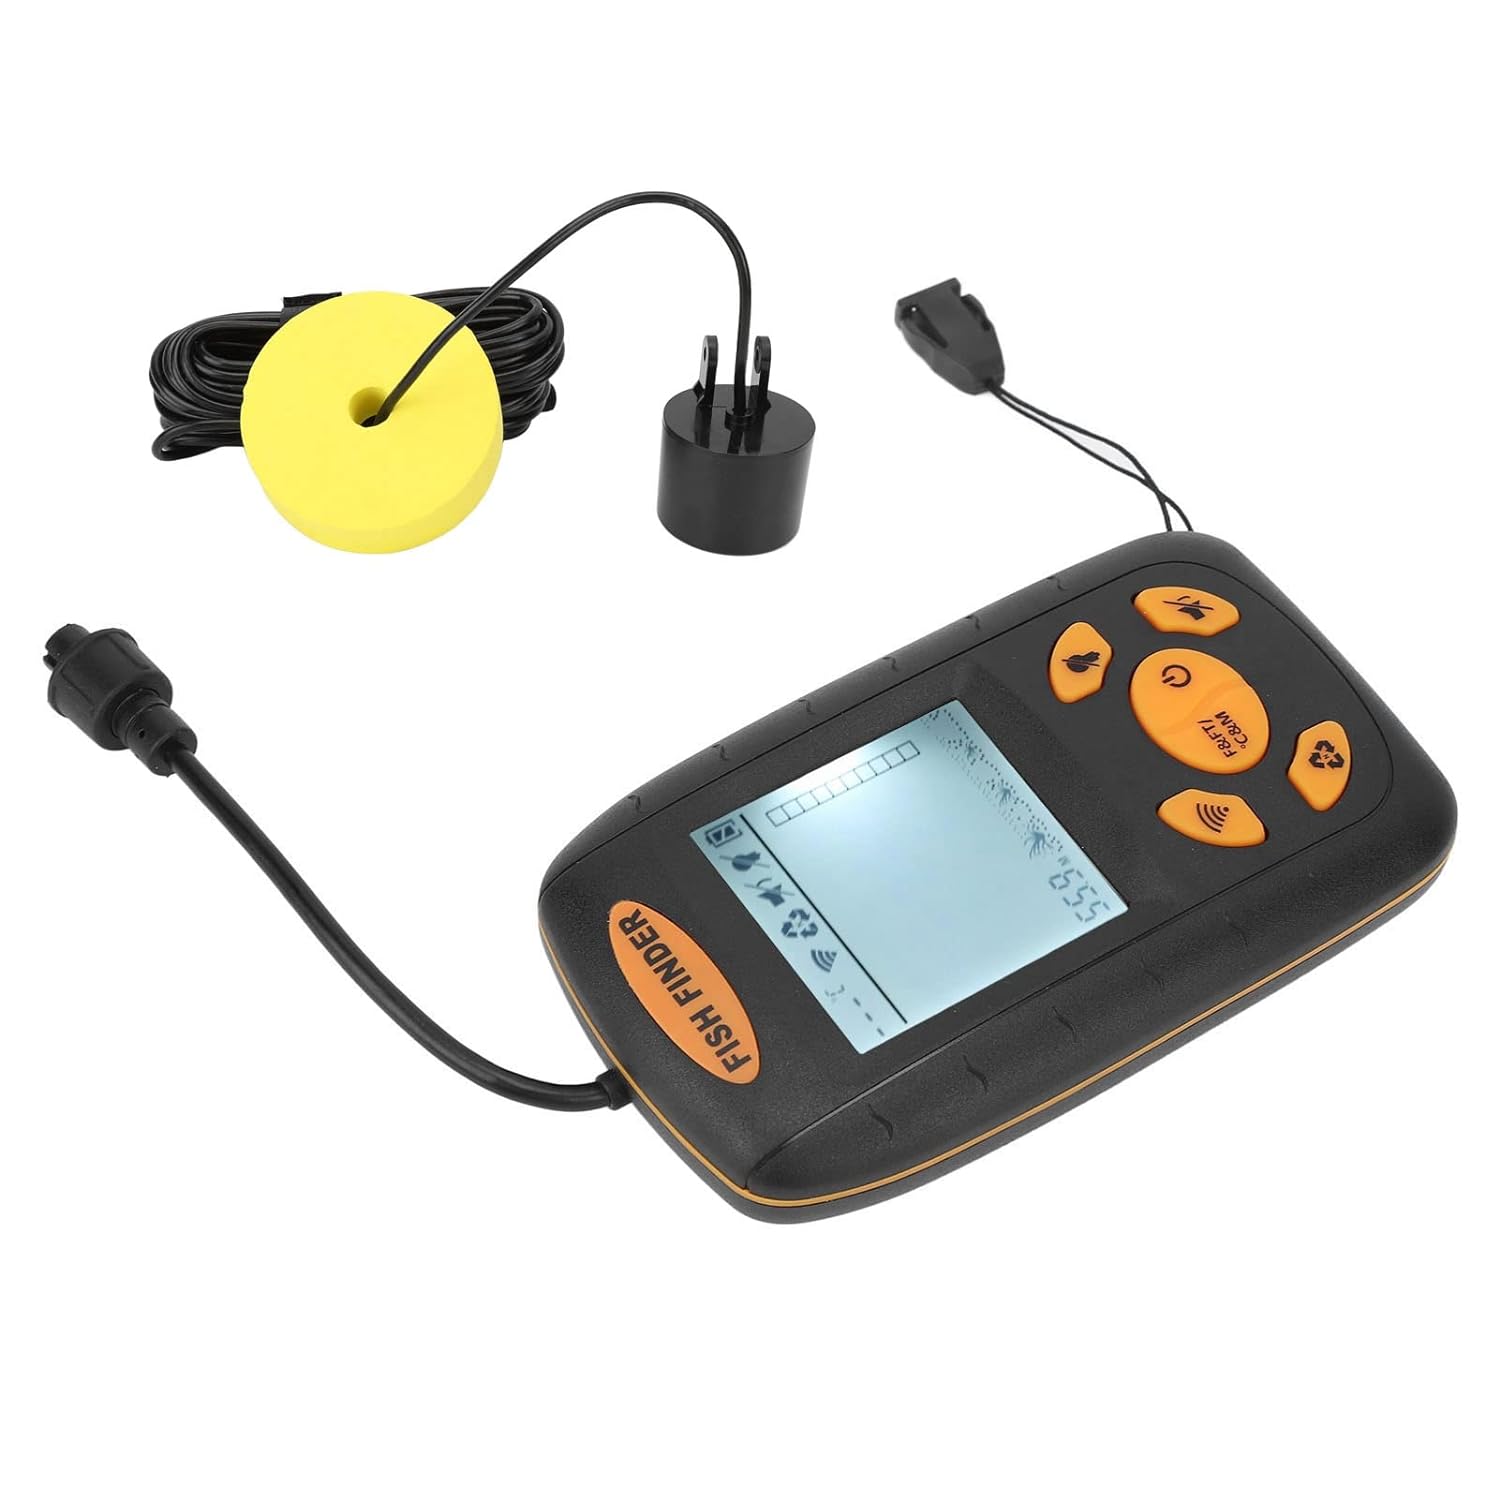 Portable Fish Finder,Handheld Fish Depth Finder Sonar Sensor,Wireless LCD Display Depth Finder with Fish Schools Alarm,for Kayak Boat Ice Fishing Sea Fishing